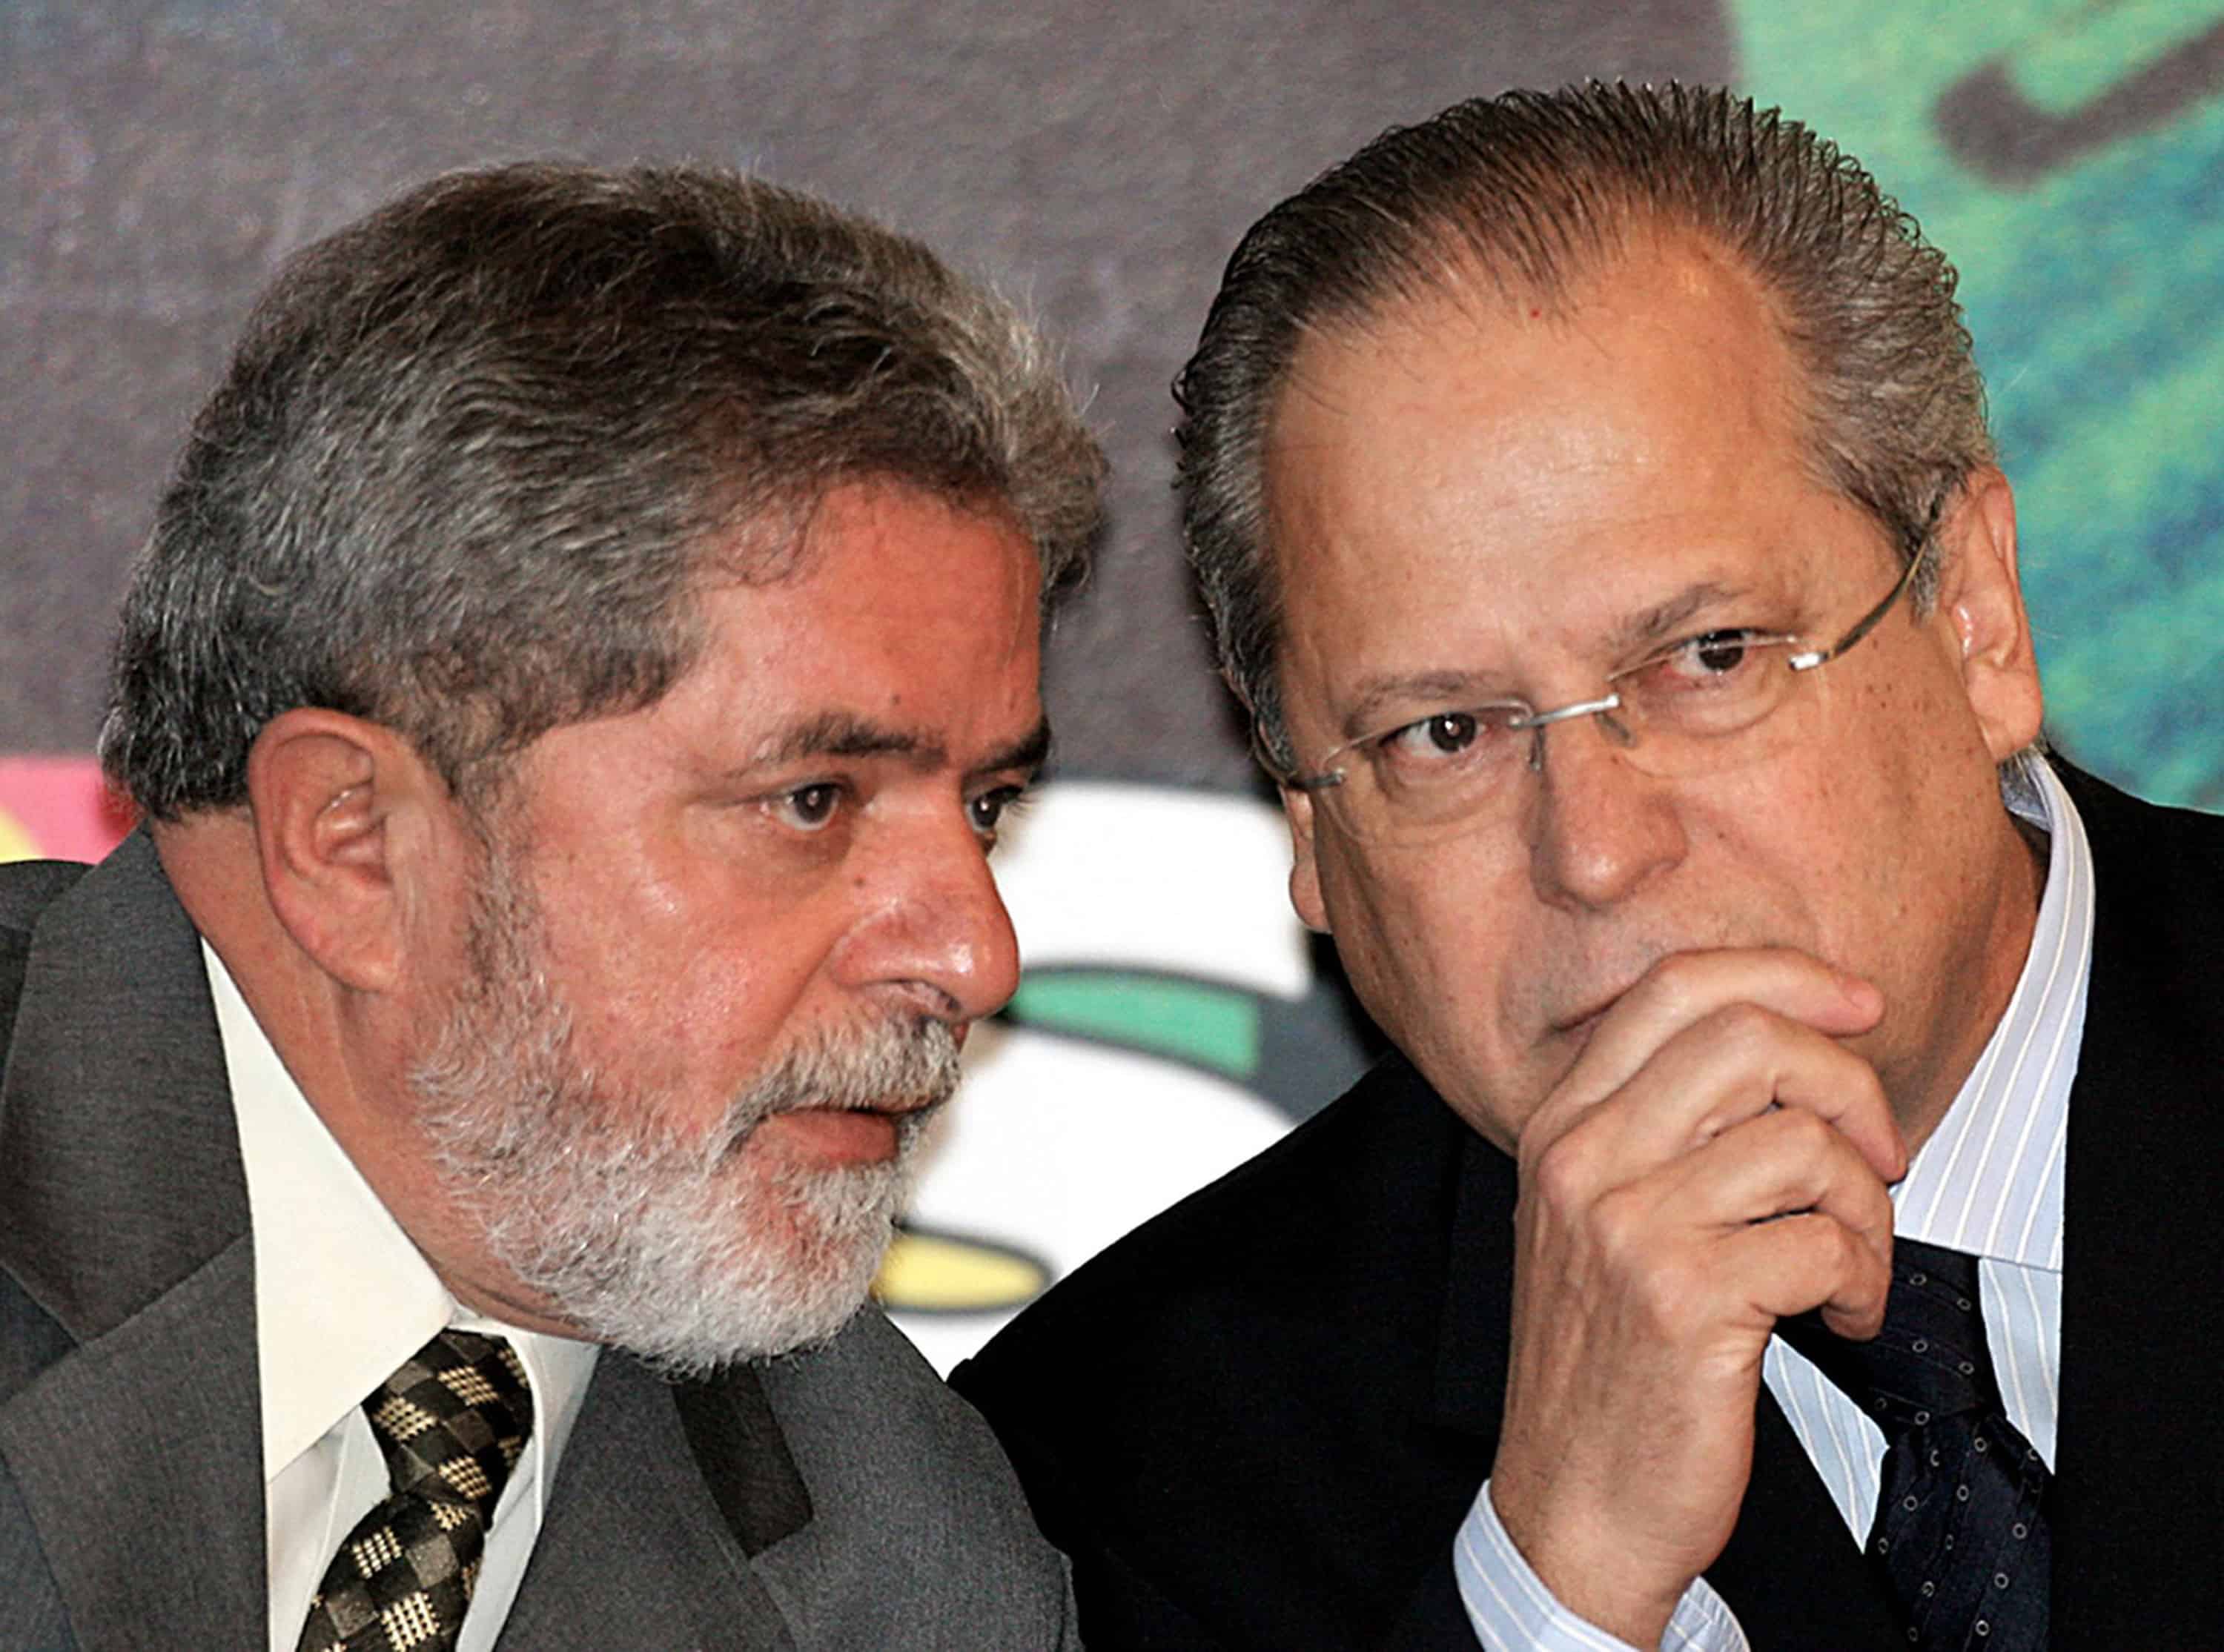 A file photo shows Brazil's ex-President Luiz Inácio Lula da Silva, left, speaking with his then-aide José Dirceu .